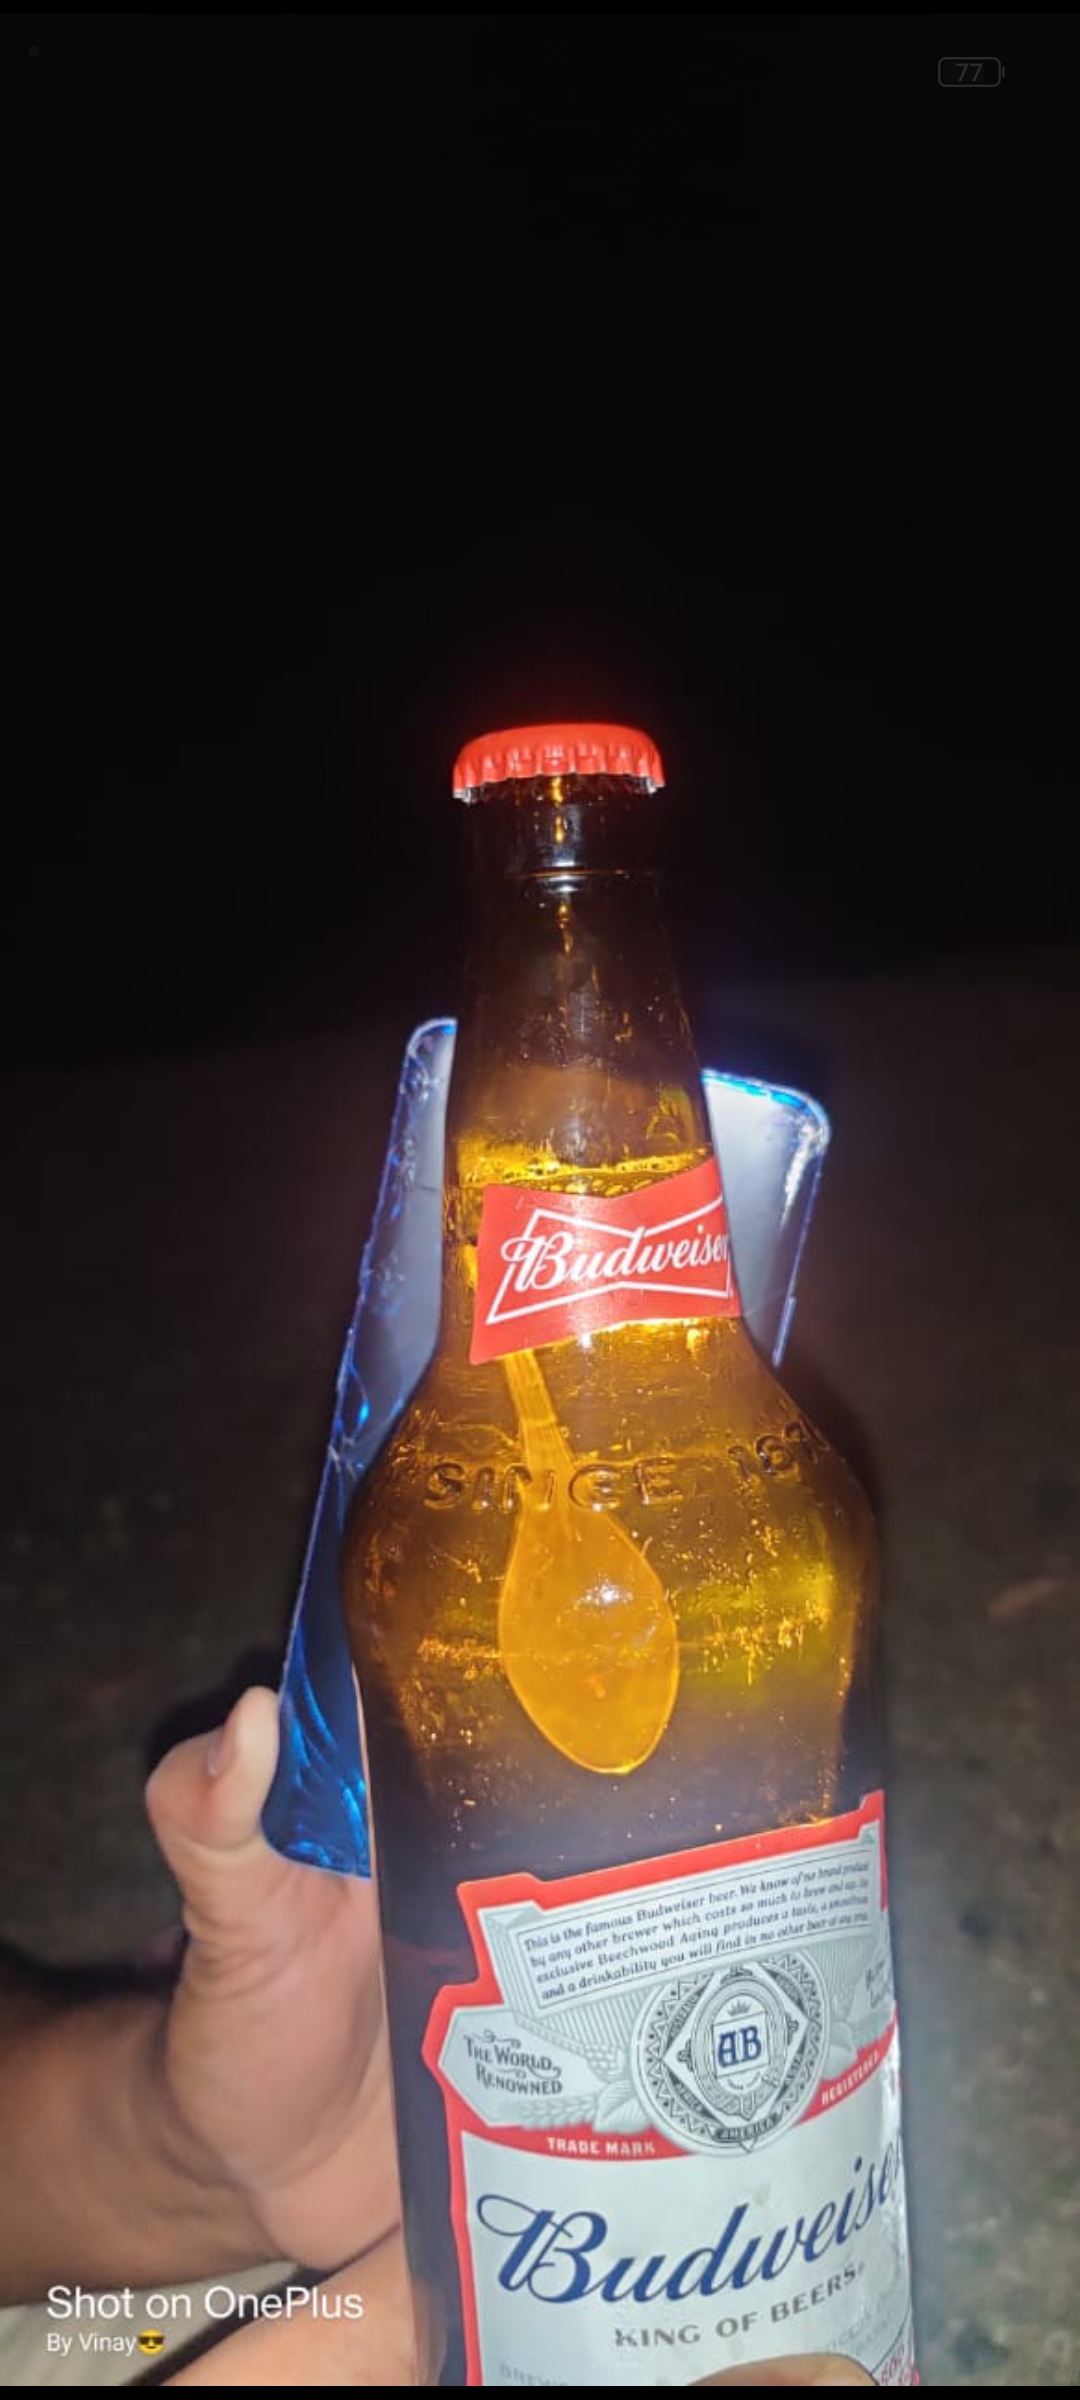 A plastic spoon in Budweiser beer